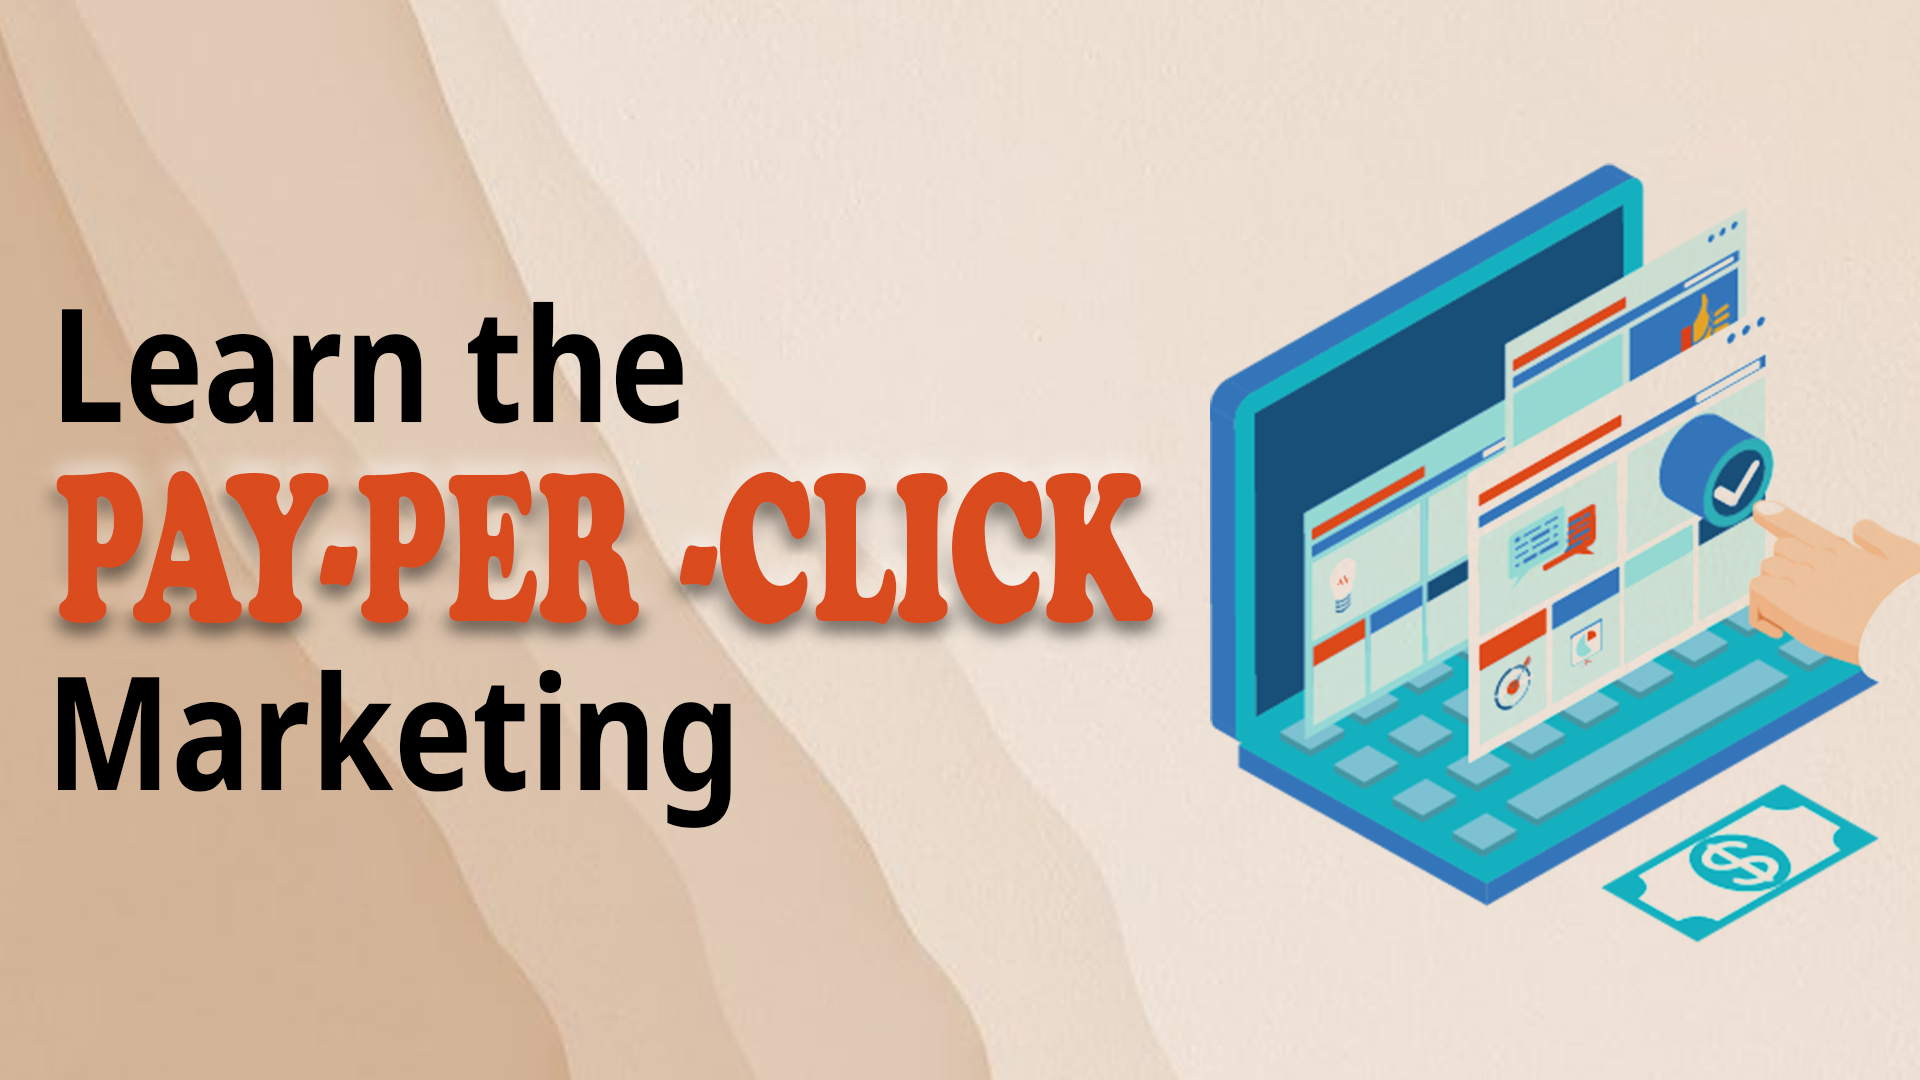 Pay-per-click Marketing